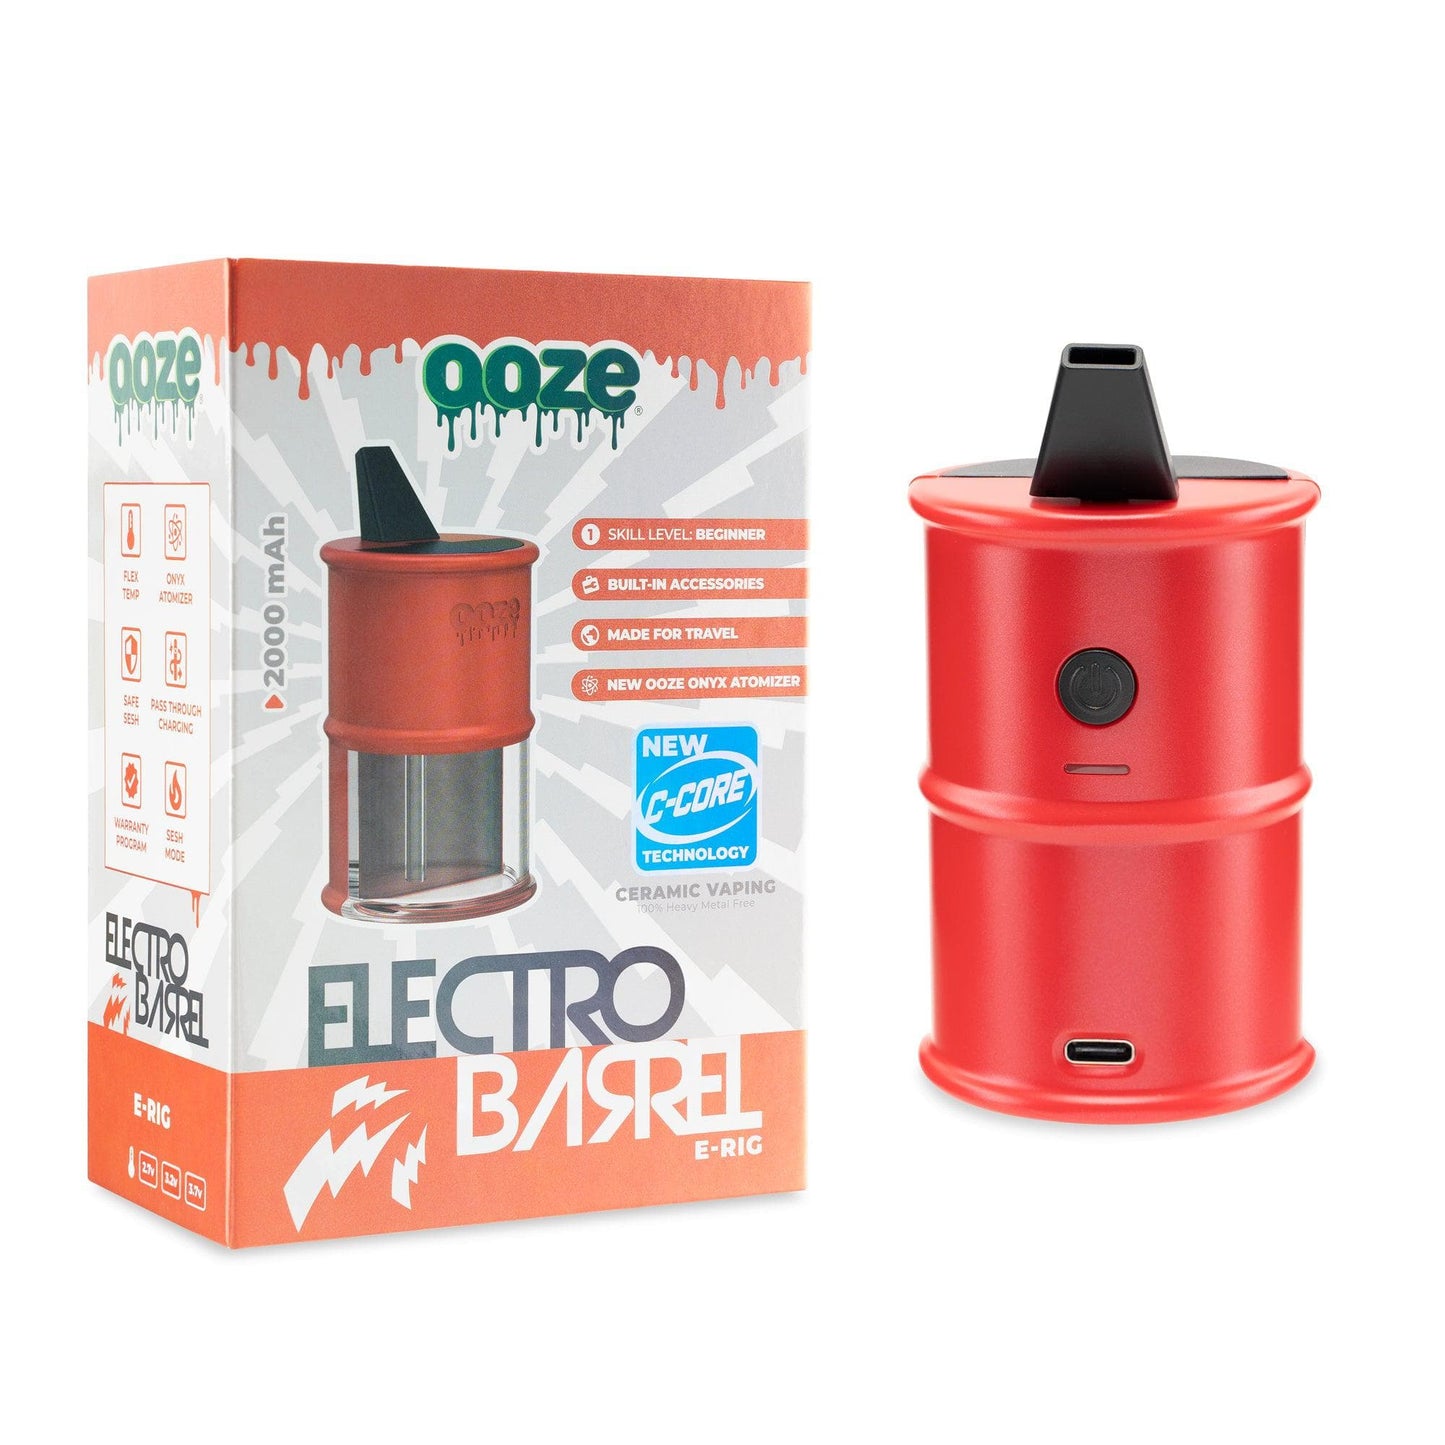 Ooze e-rig Ruby Red Ooze Electro Barrel E-Rig – C-Core 2000 mAh